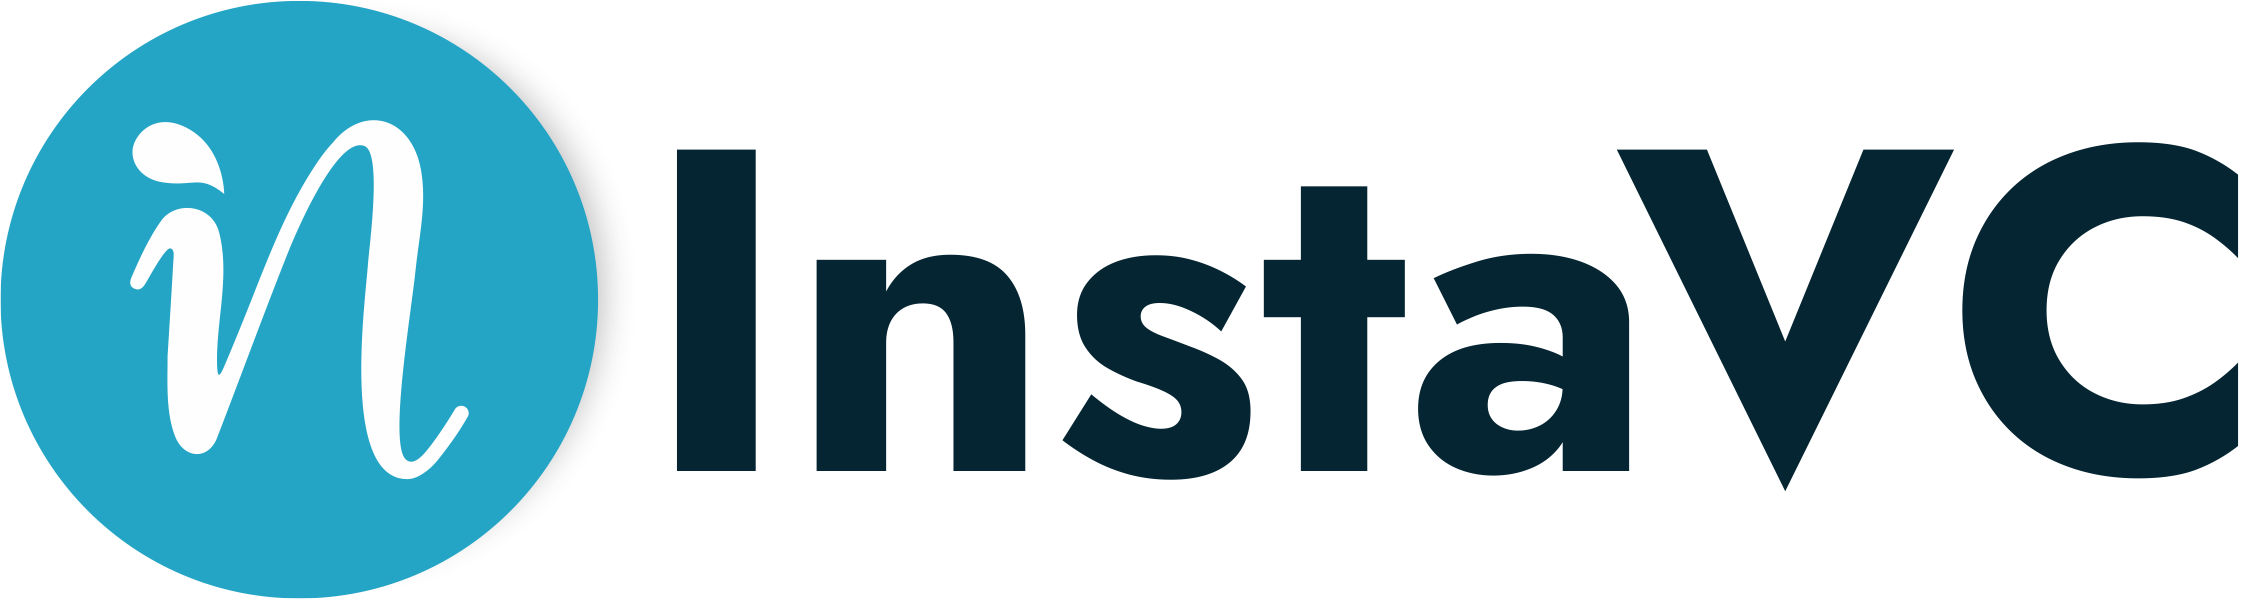 InstaVC logo